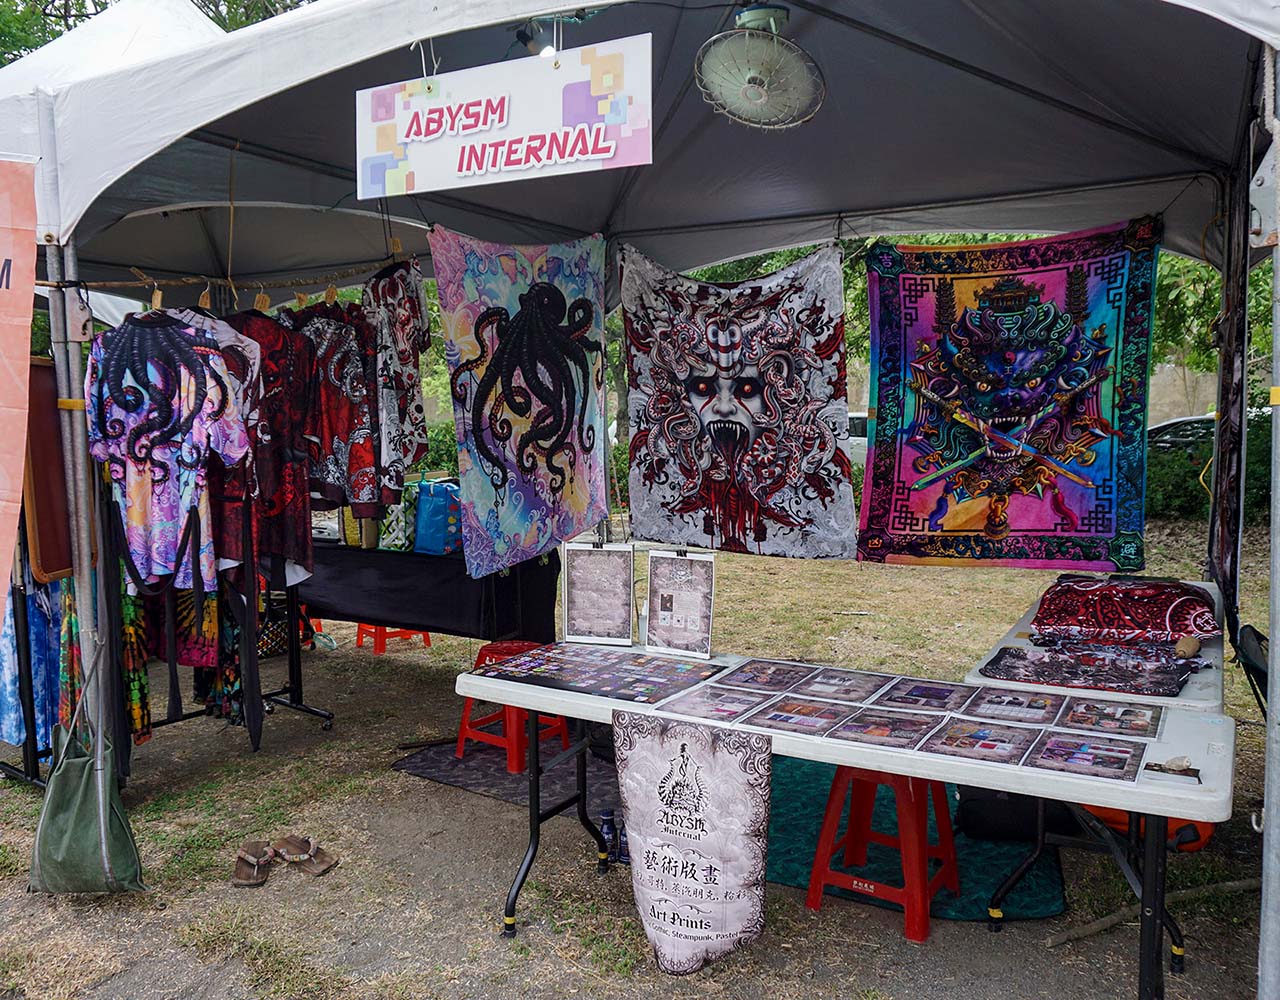 Abysm Internal, Dark Fantasy Art Prints selling stall